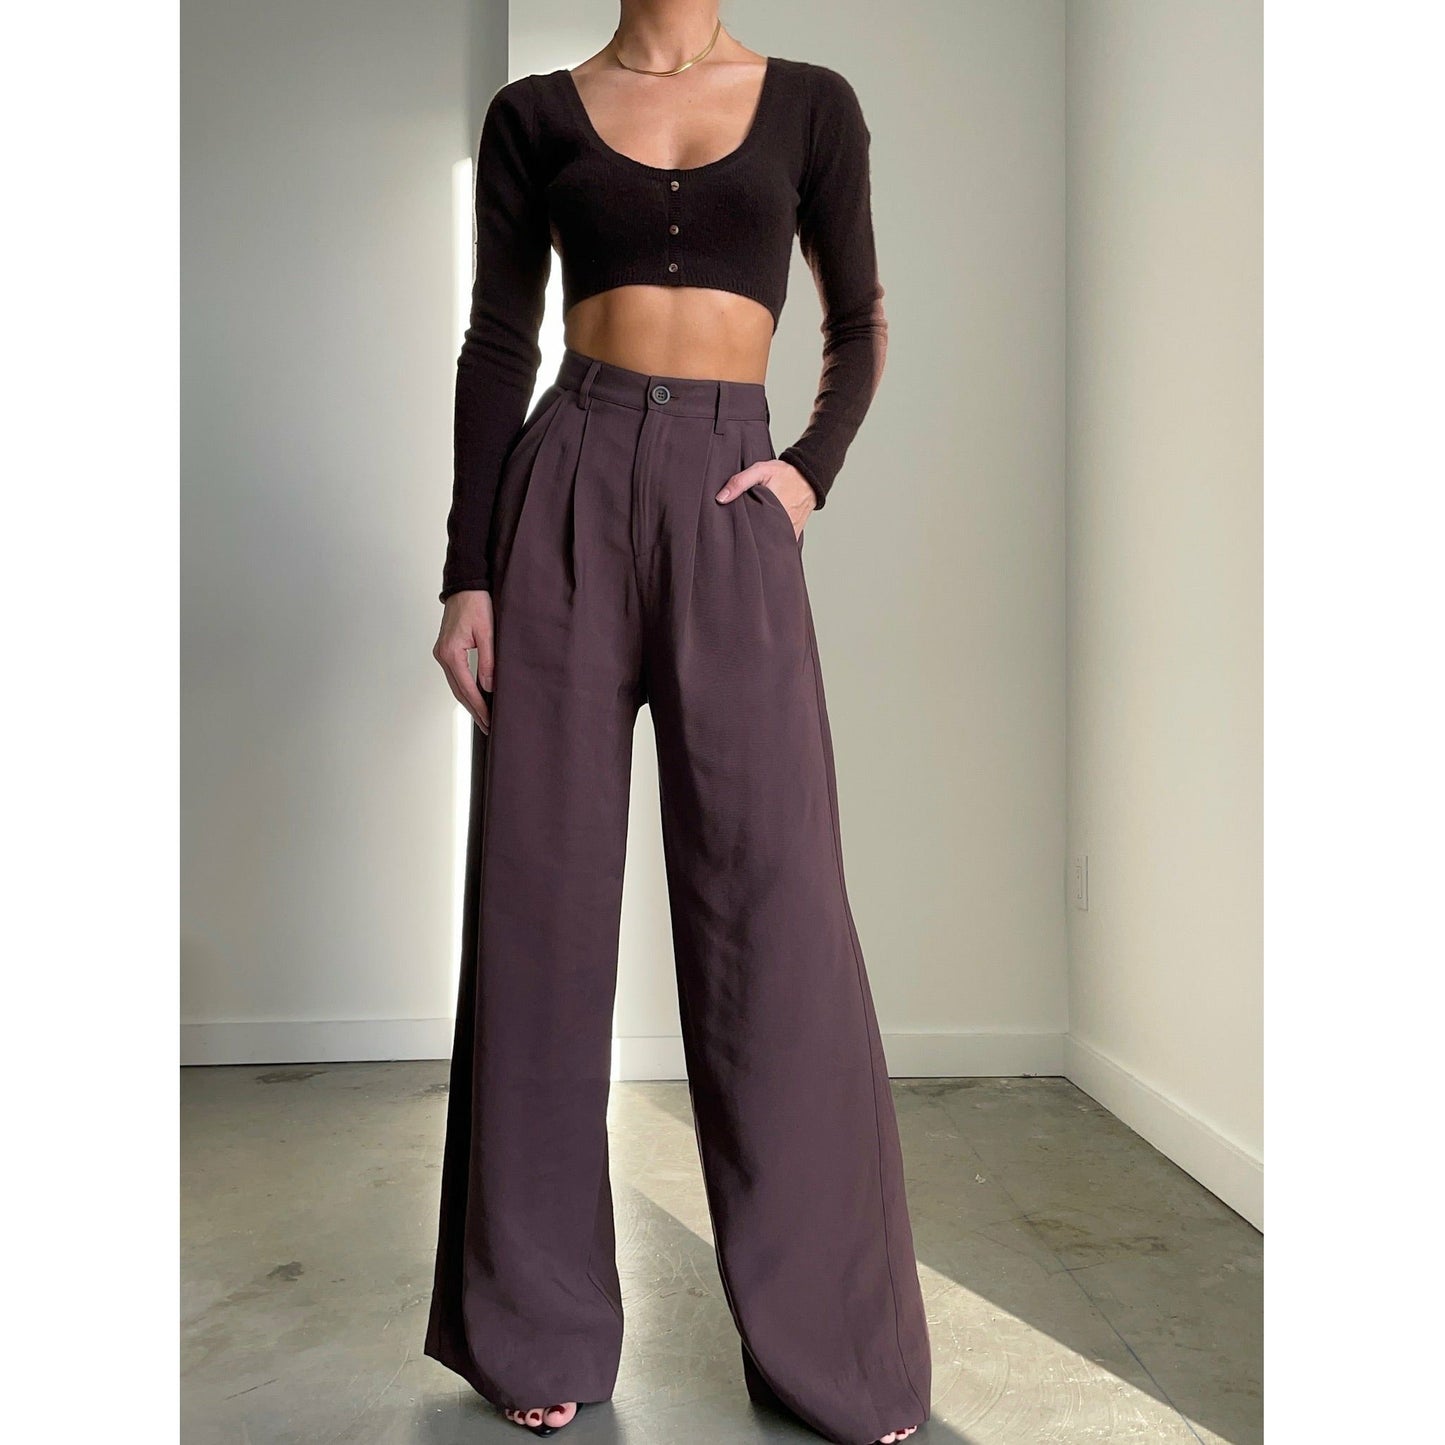 Fabi Pants | Women’s Clothing Boutique